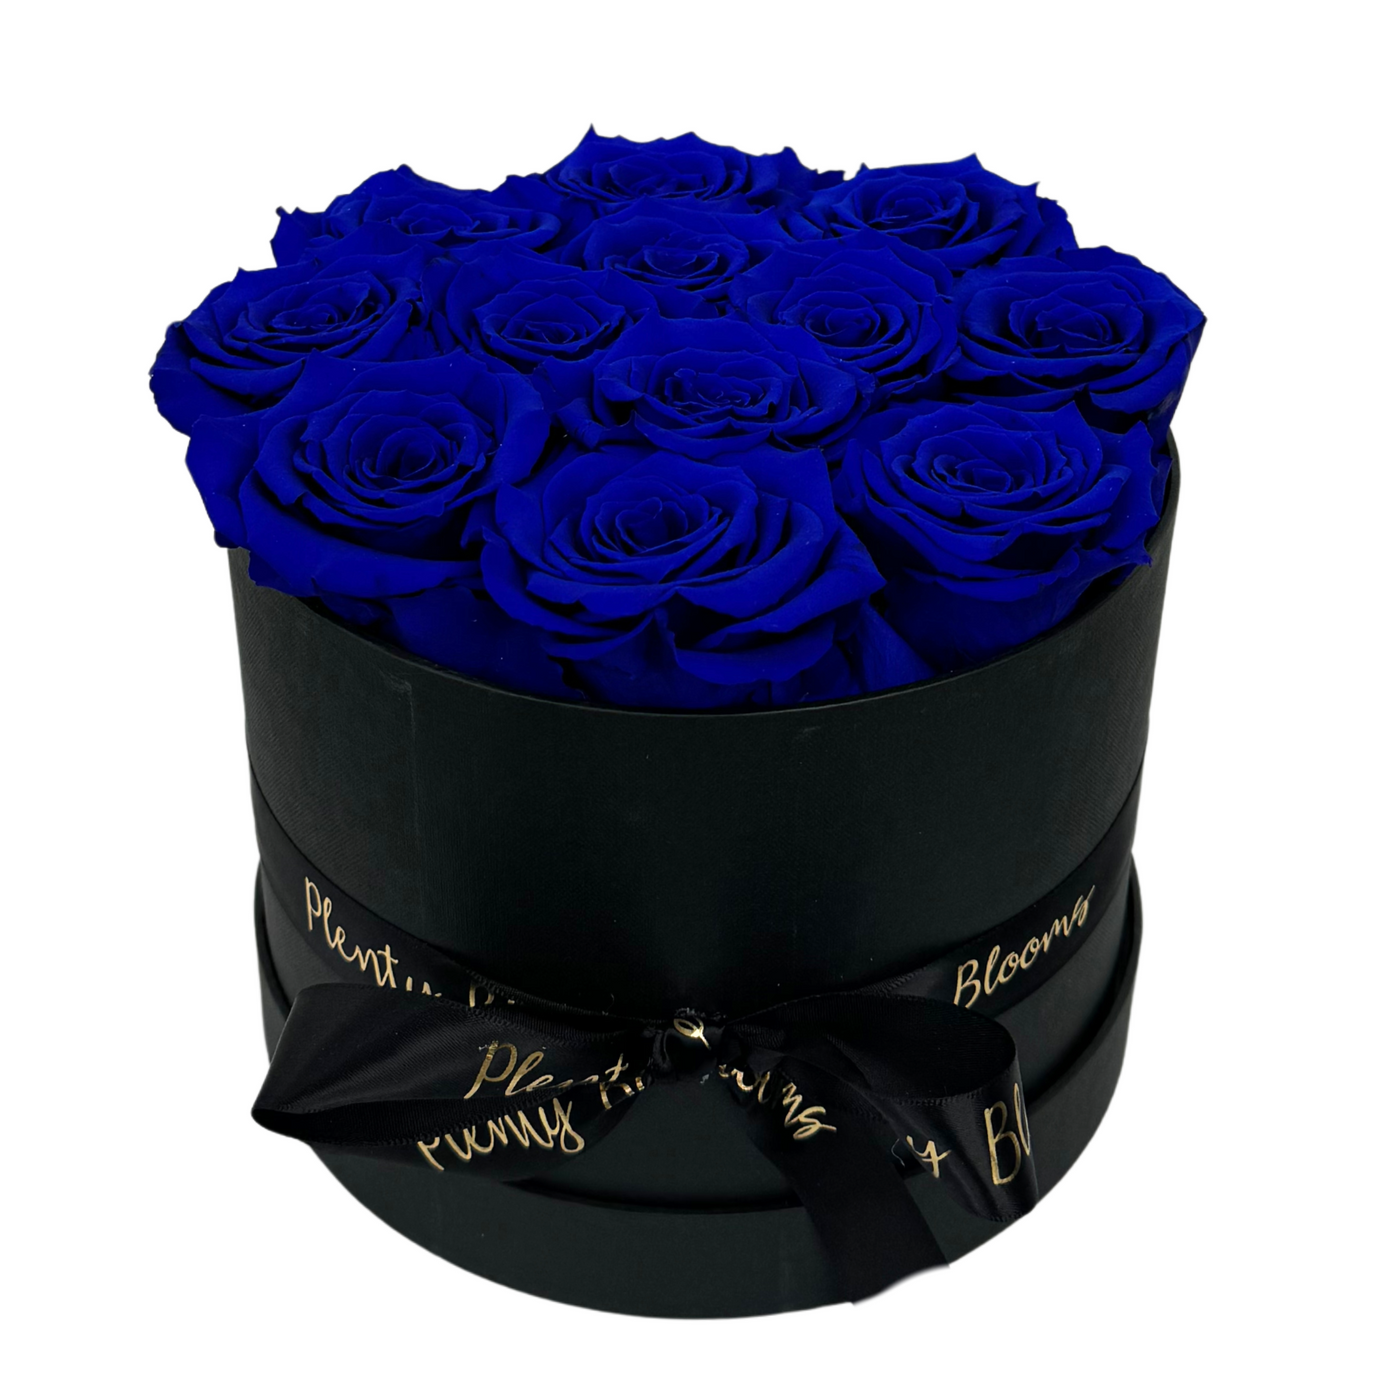 Signature Royal Blue Preserved Roses Gift Box